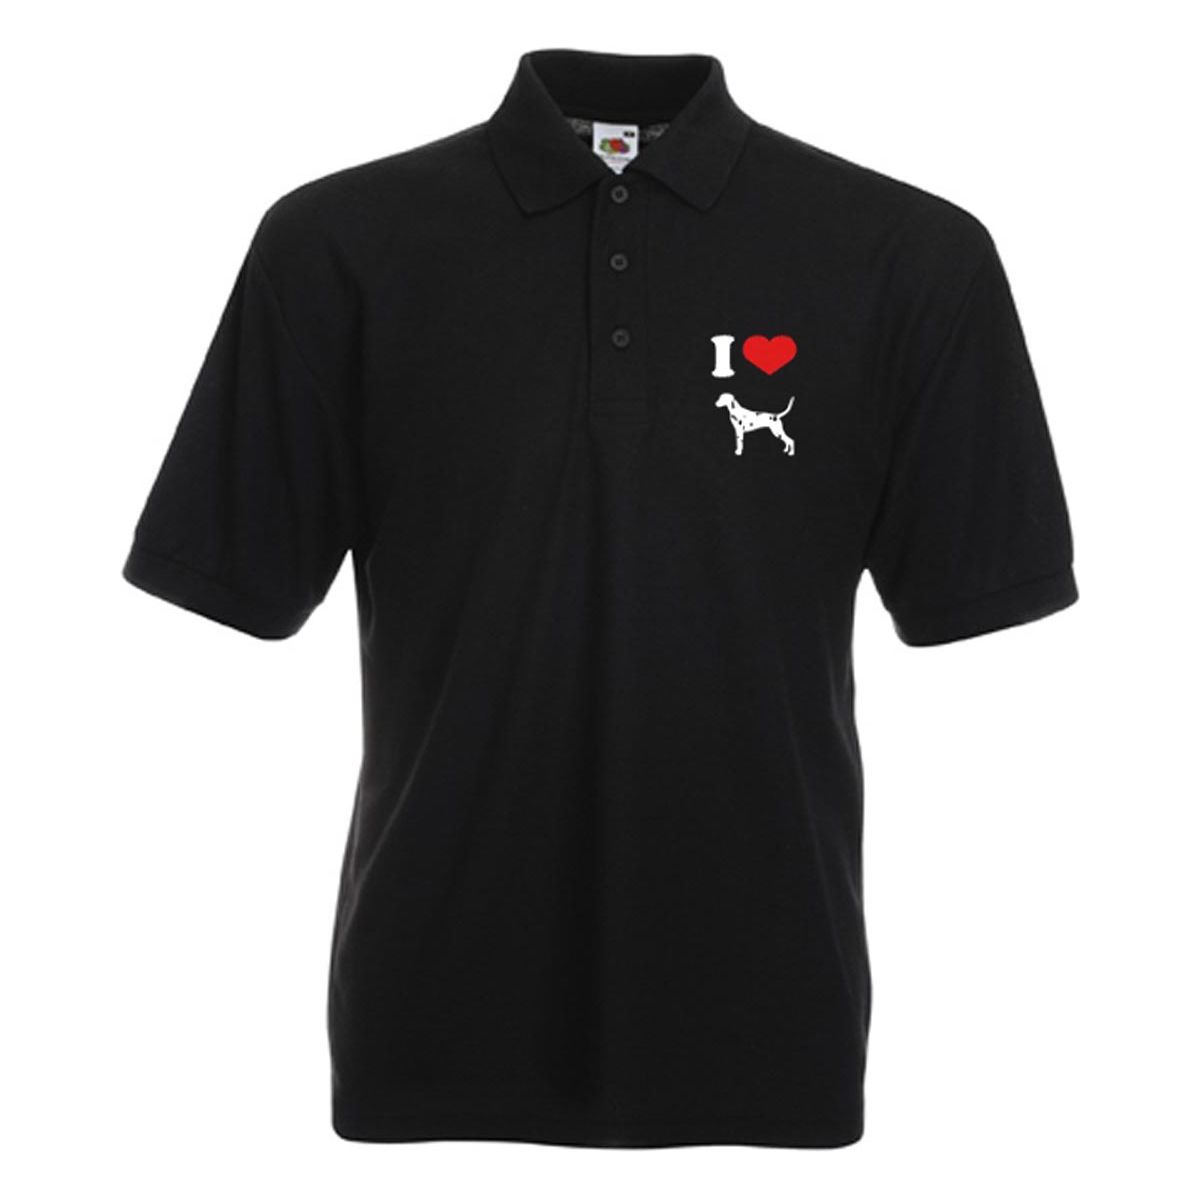 I Love Dalmatians Black Polo T Shirt - Ashton and Finch